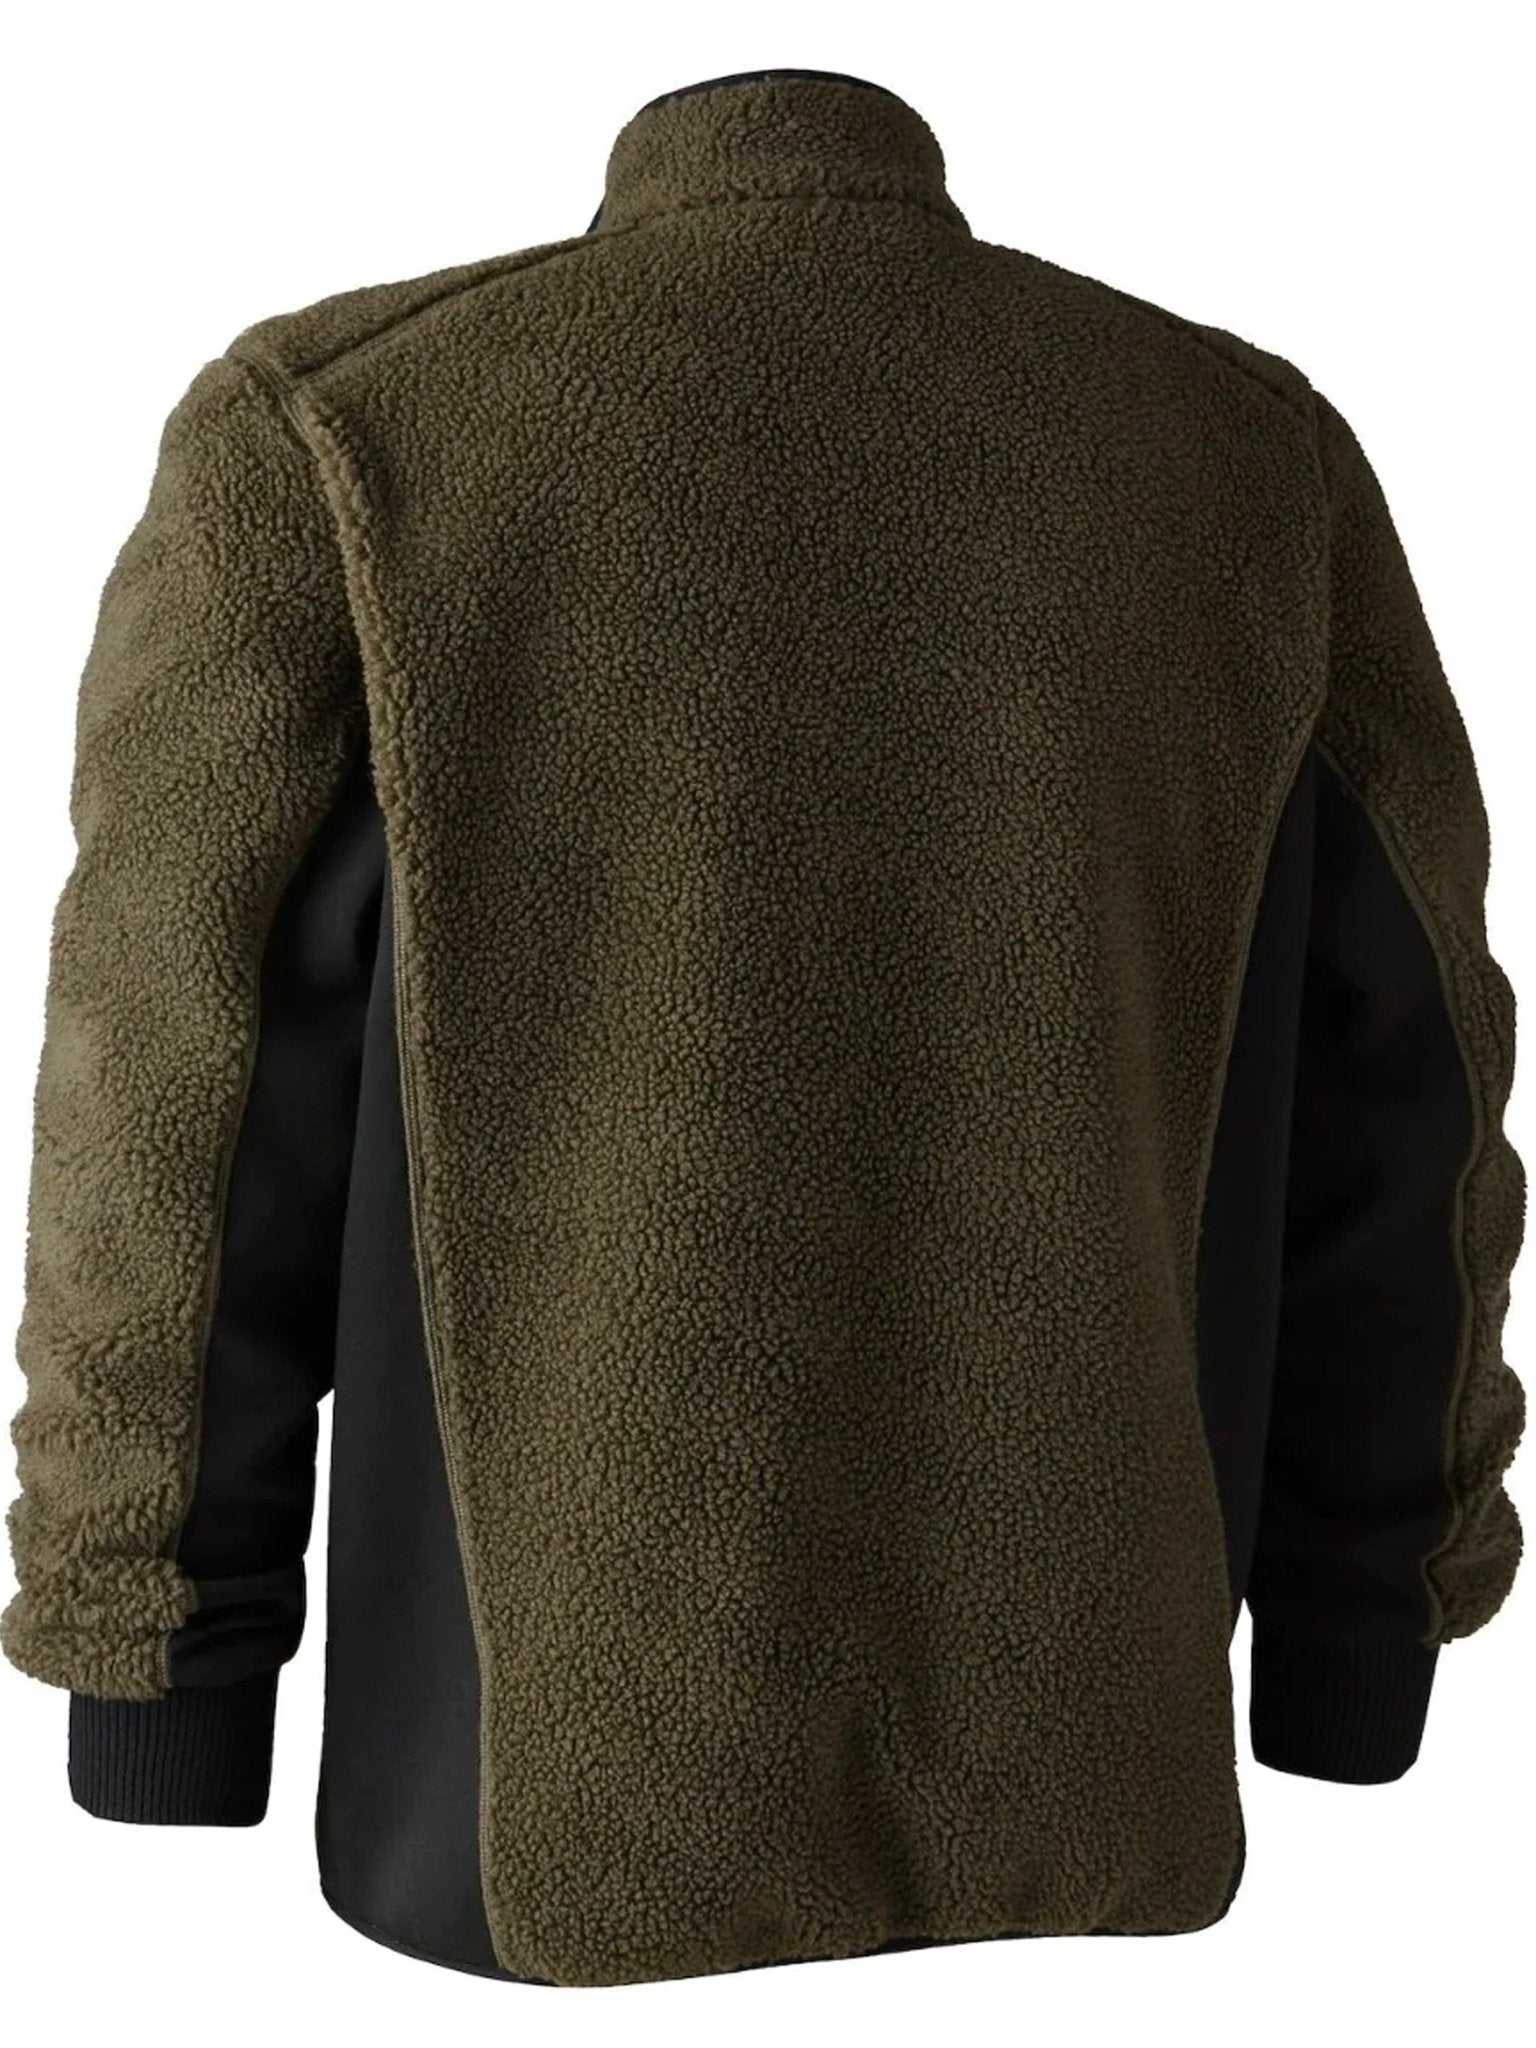 4elementsclothingDeerhunterDeerhunter - Rogaland Fiber Pile Jacket / Breathable, warm Mens JacketOuterwear5125-582-M